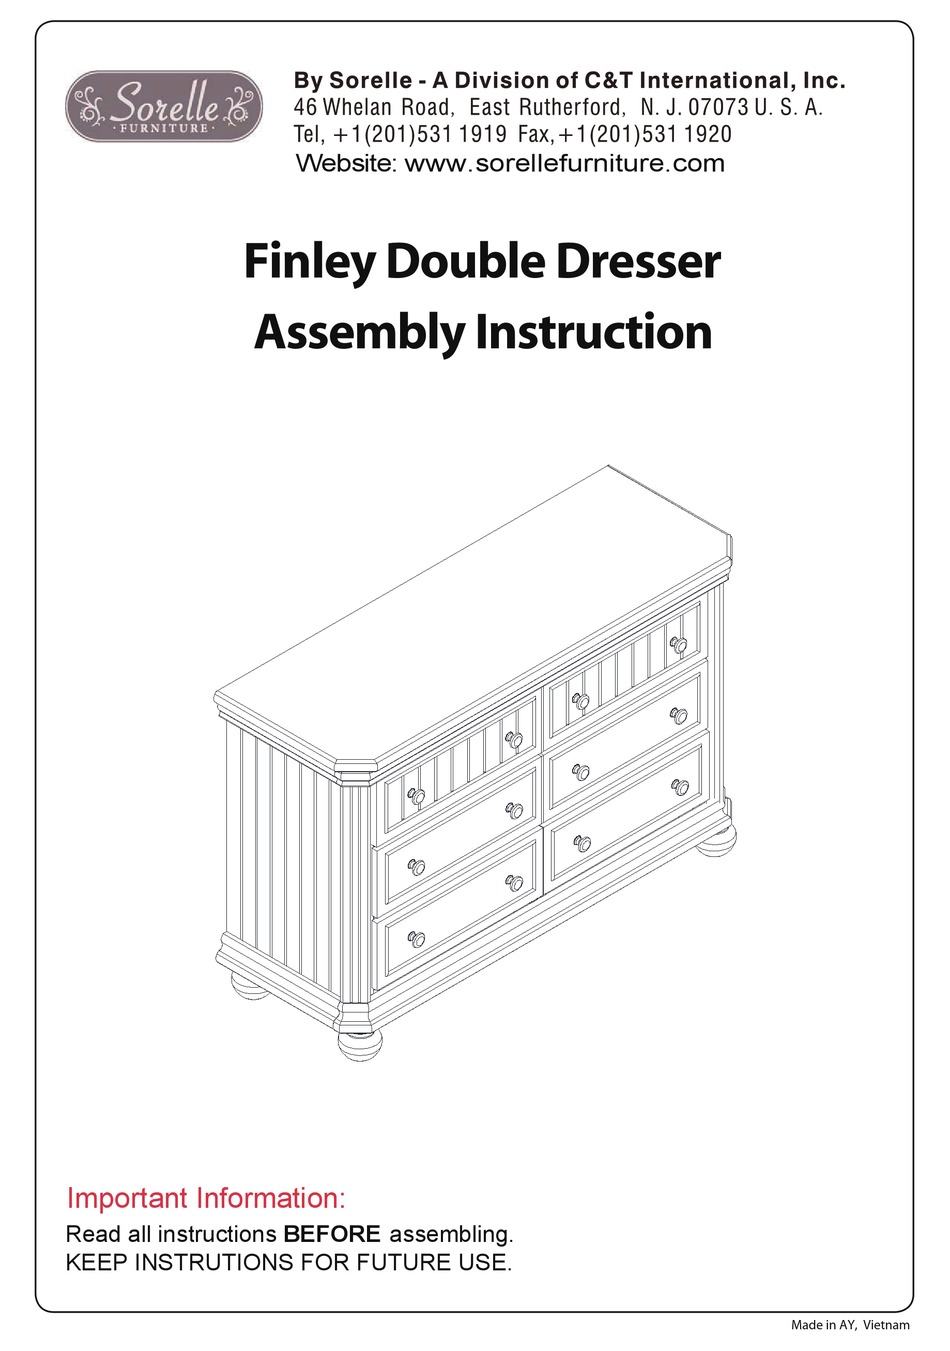 Sorelle Finley Double Dresser Assembly, Sorelle Finley Dresser